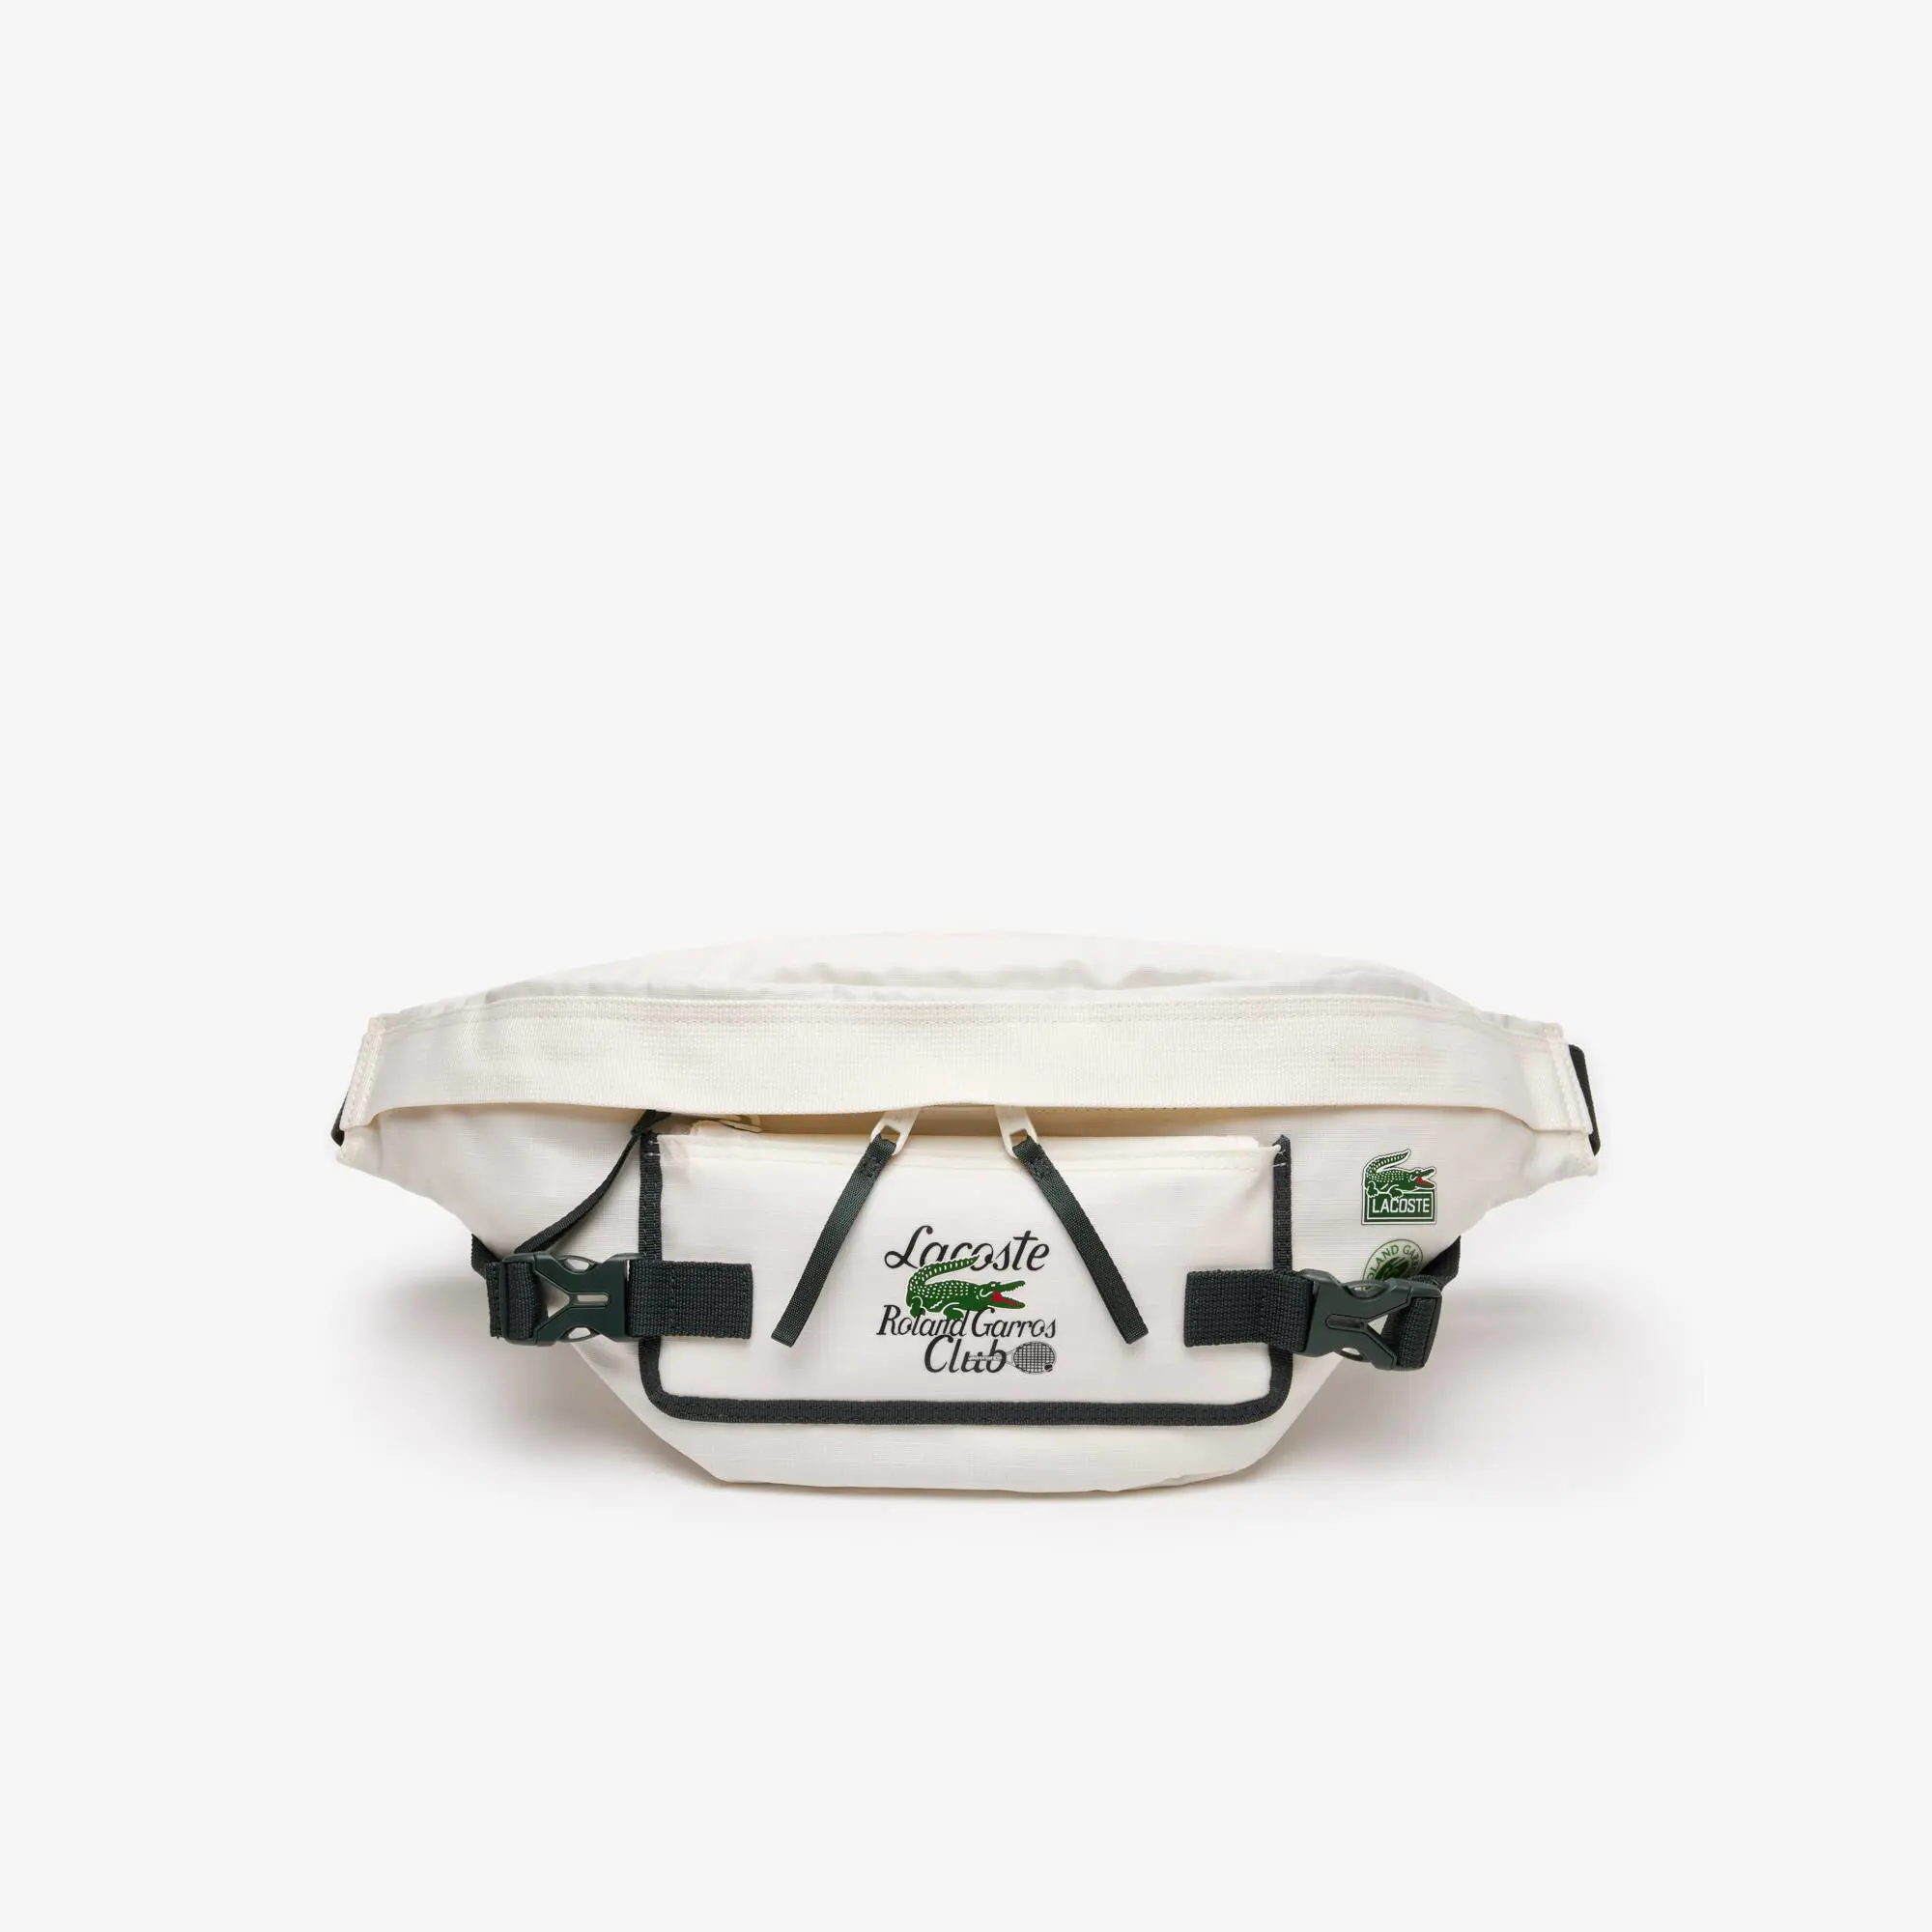 Lacoste Men’s Roland Garros Edition Contrast Print Belt Bag. 1